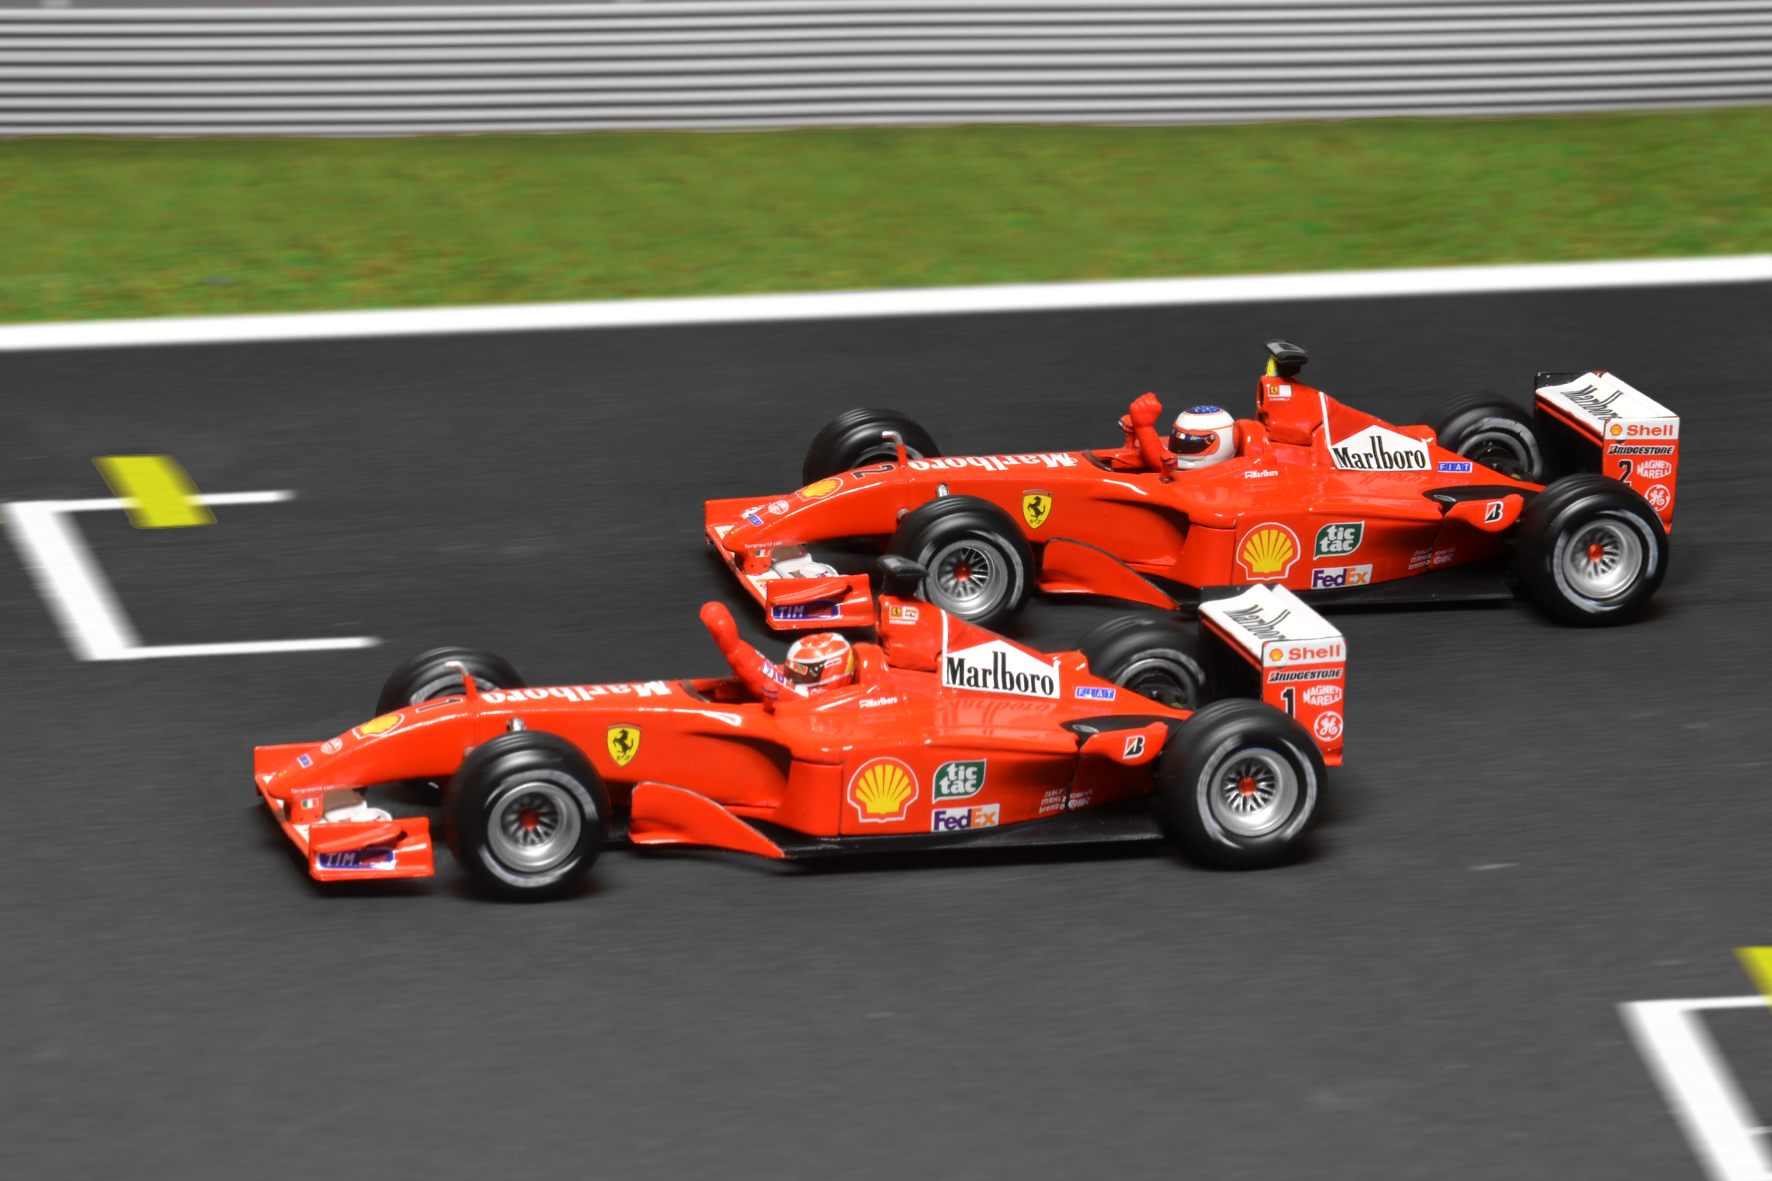 Ferrari F2001 Michael Schumacher & Rubens Barrichello 2001 - Hot Wheels Constructors Champion edition 1:43